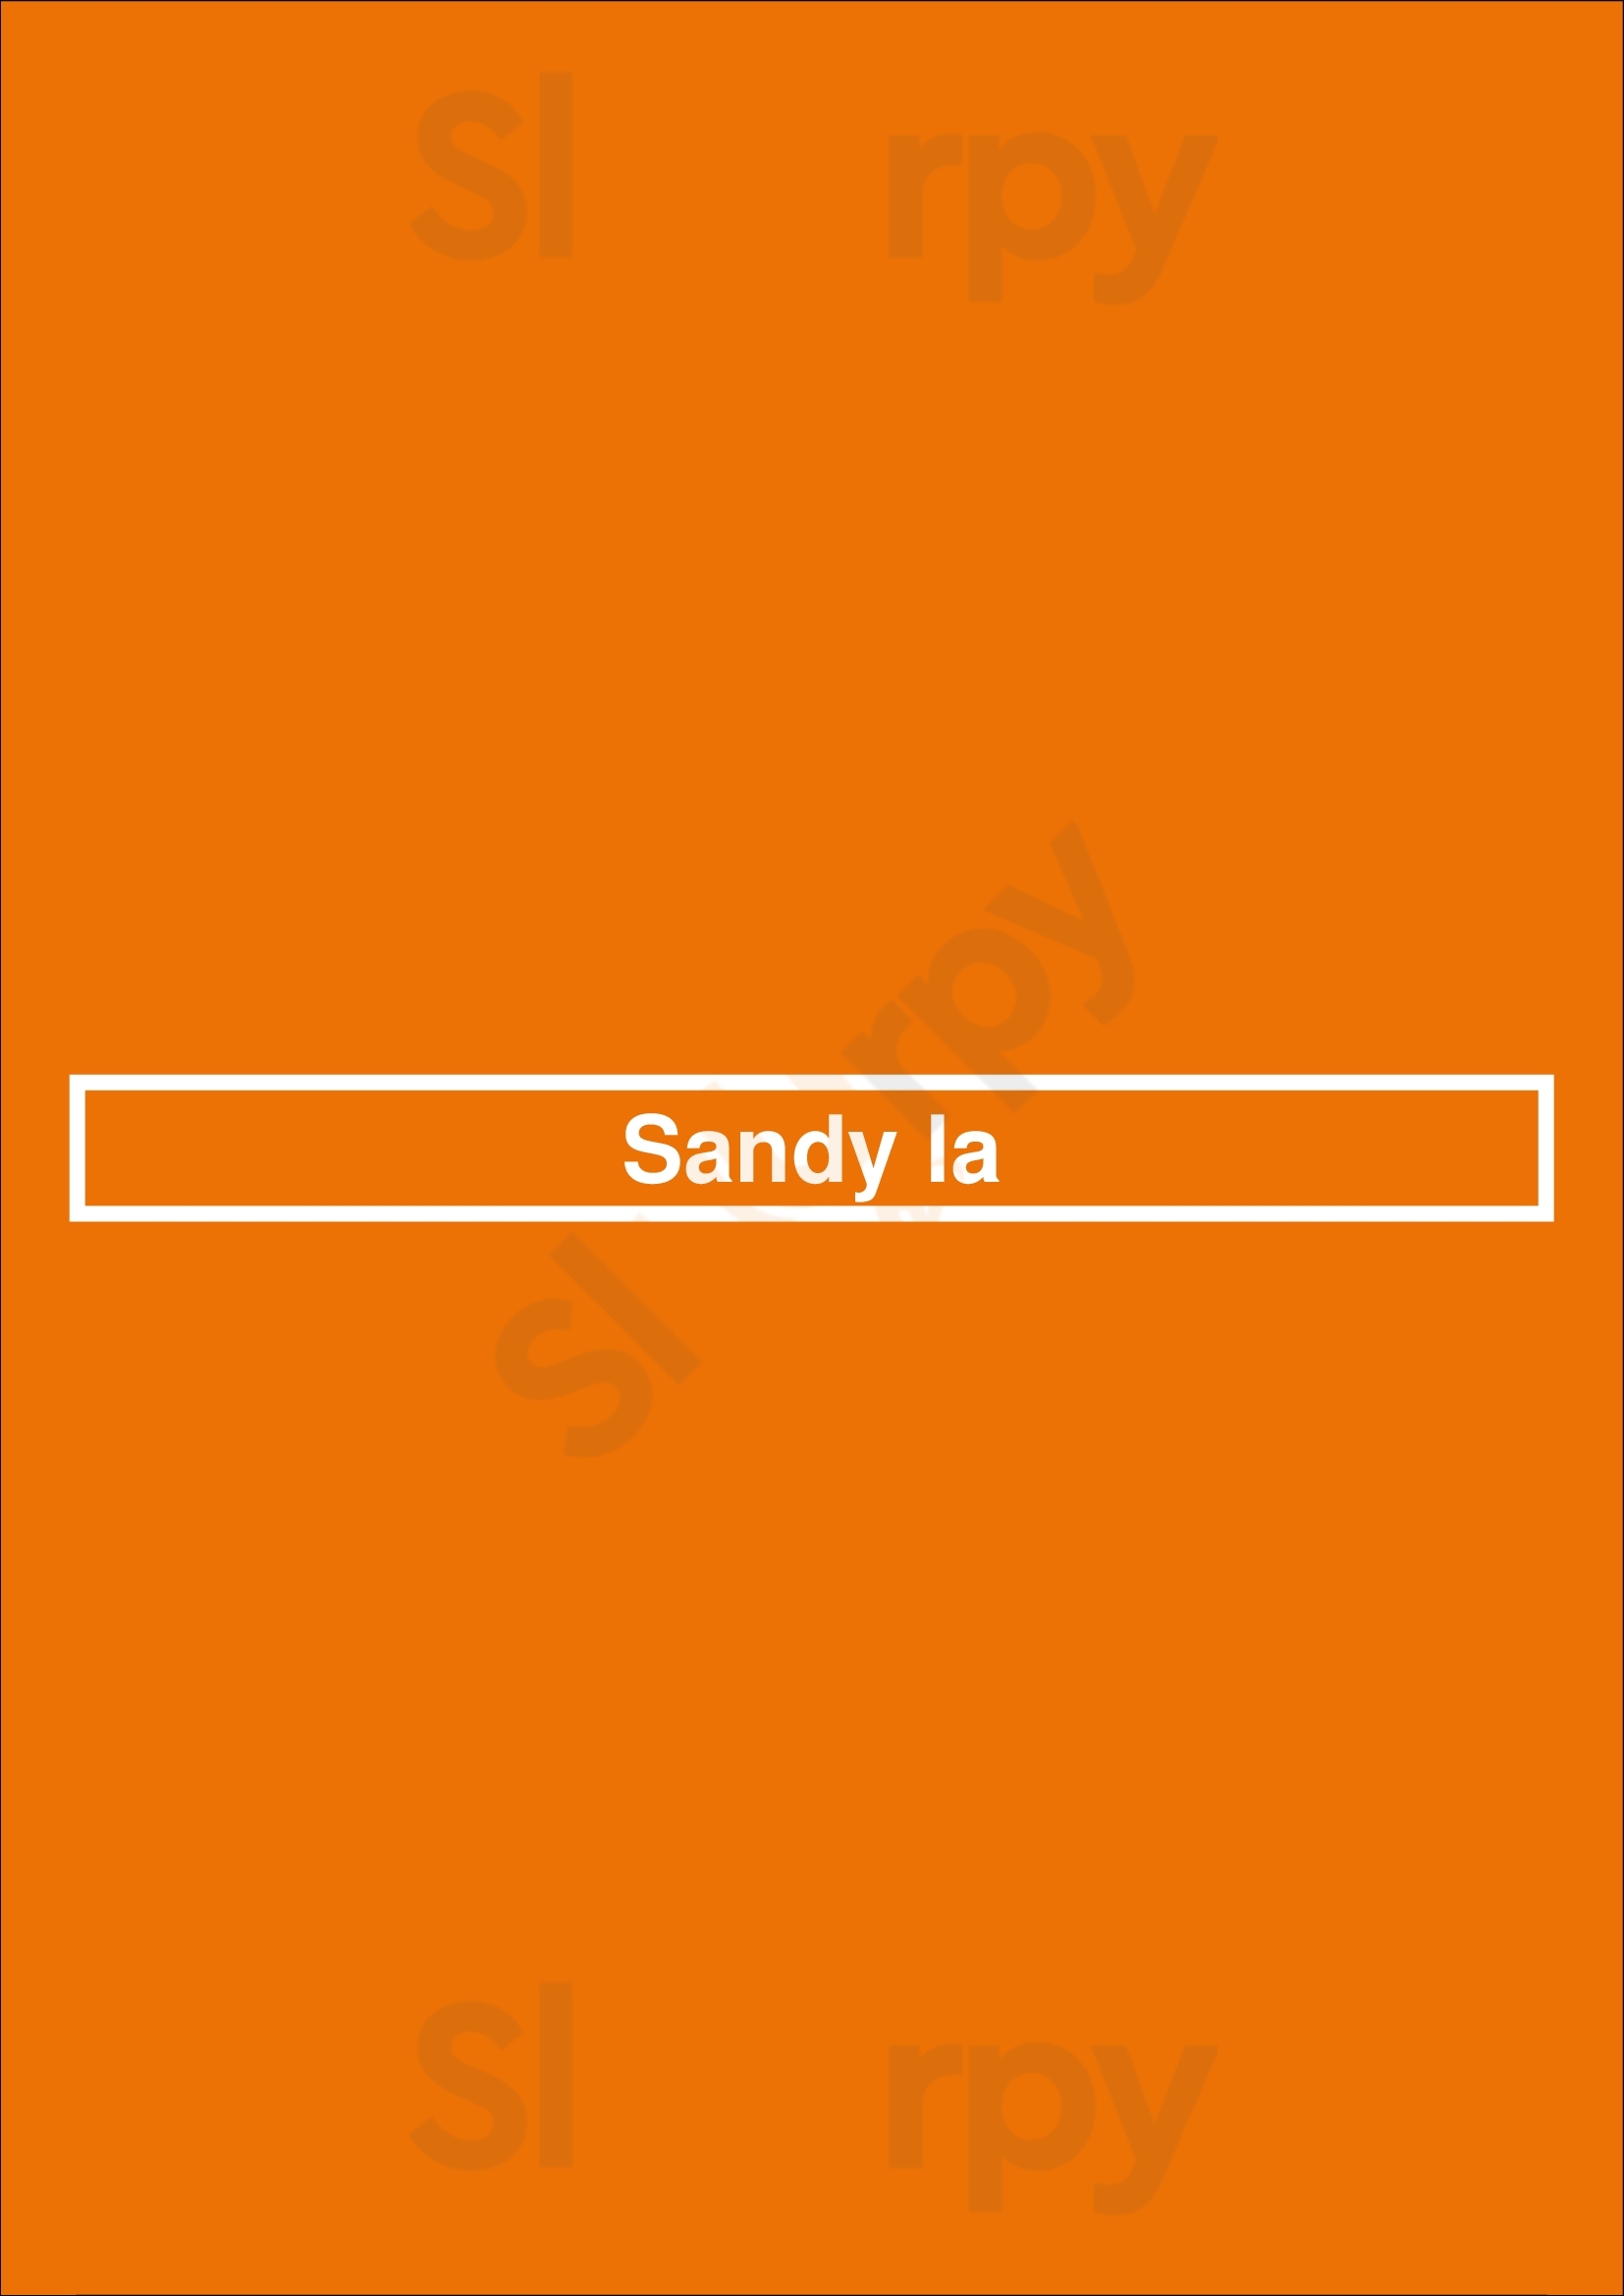 Sandy La Vancouver Menu - 1